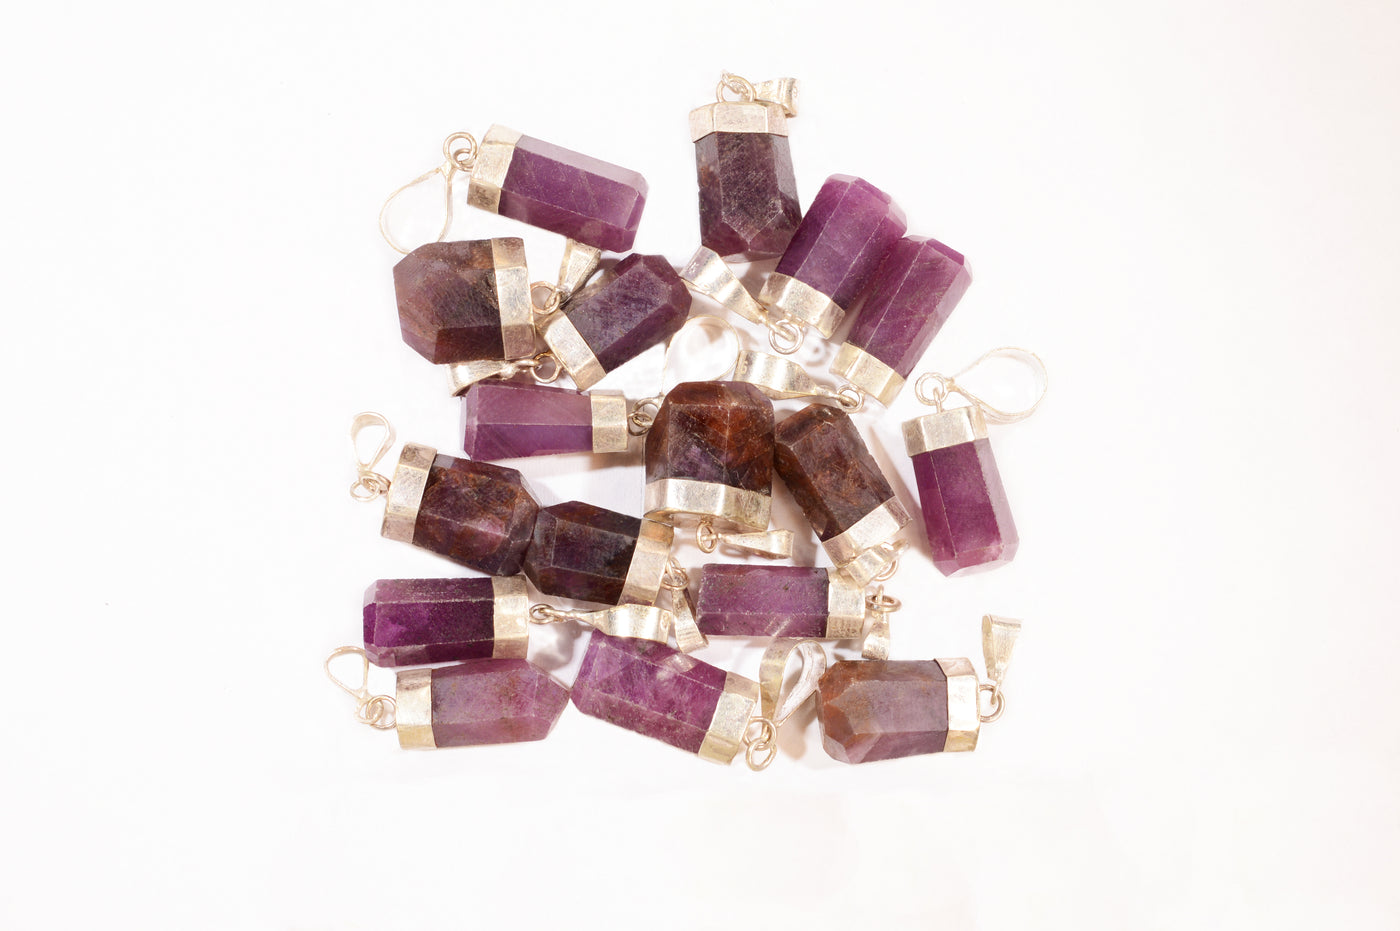 Irregular Handmade Natural Amethyst Rock Necklace Quartz Healing Purple  Crystal Gemstone Pendant Chakra Birthstone Jewellery Gift 